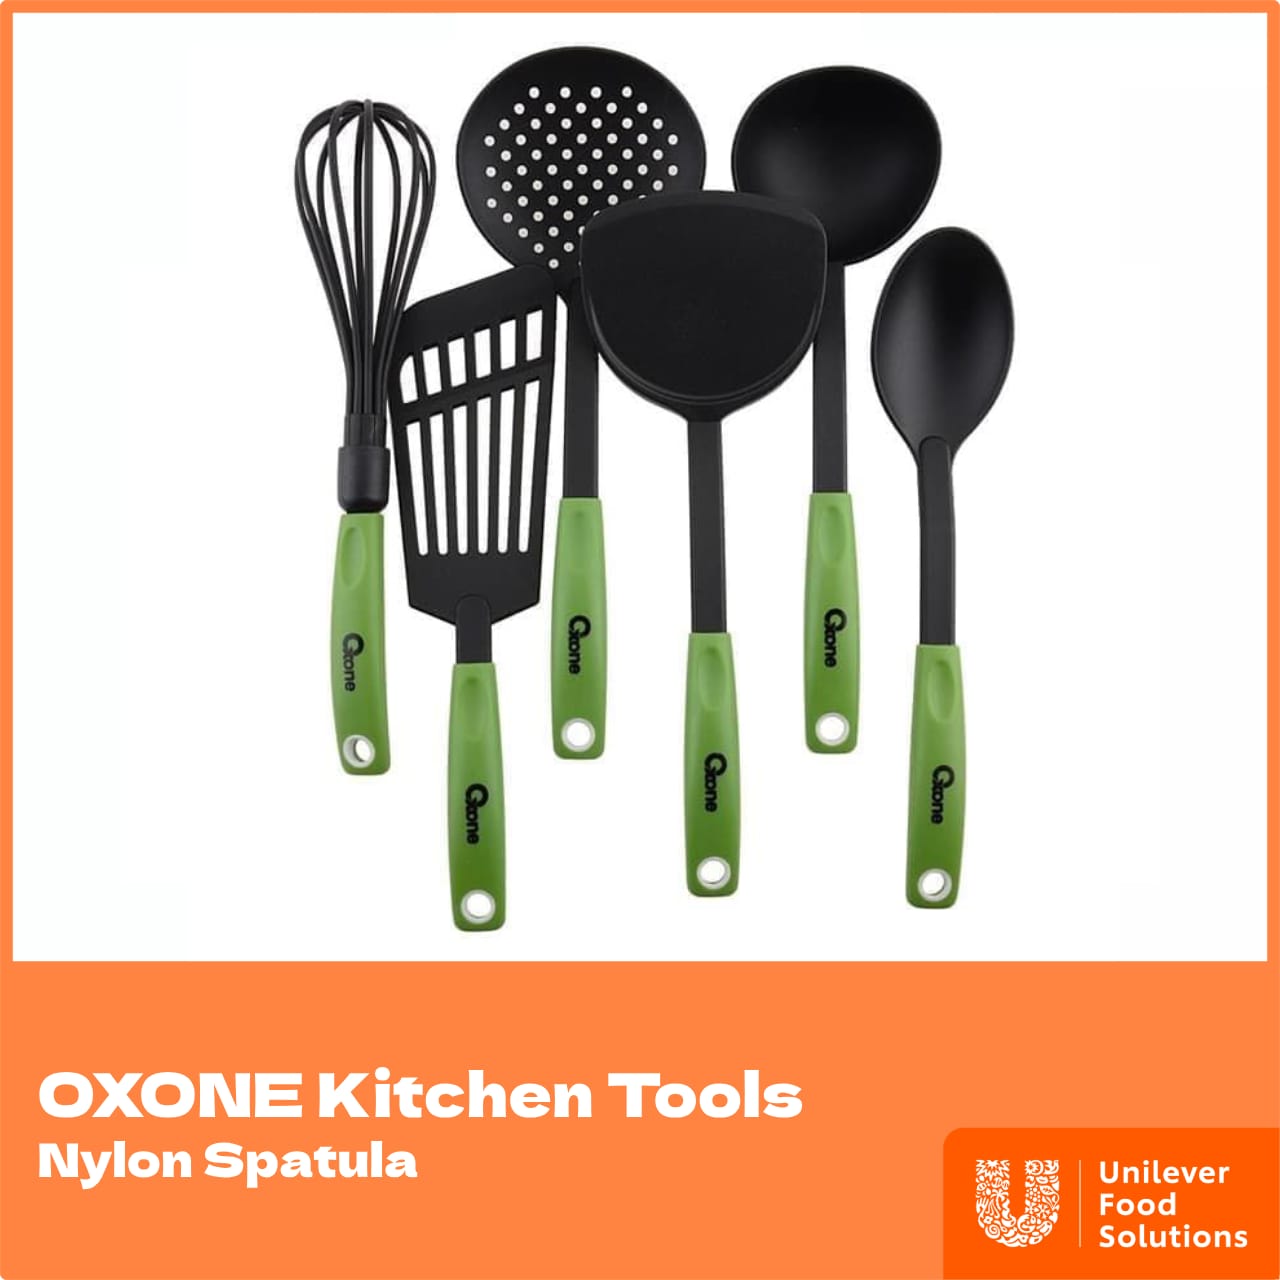 Oxone Kitchen Tools Nylon Spatula - 